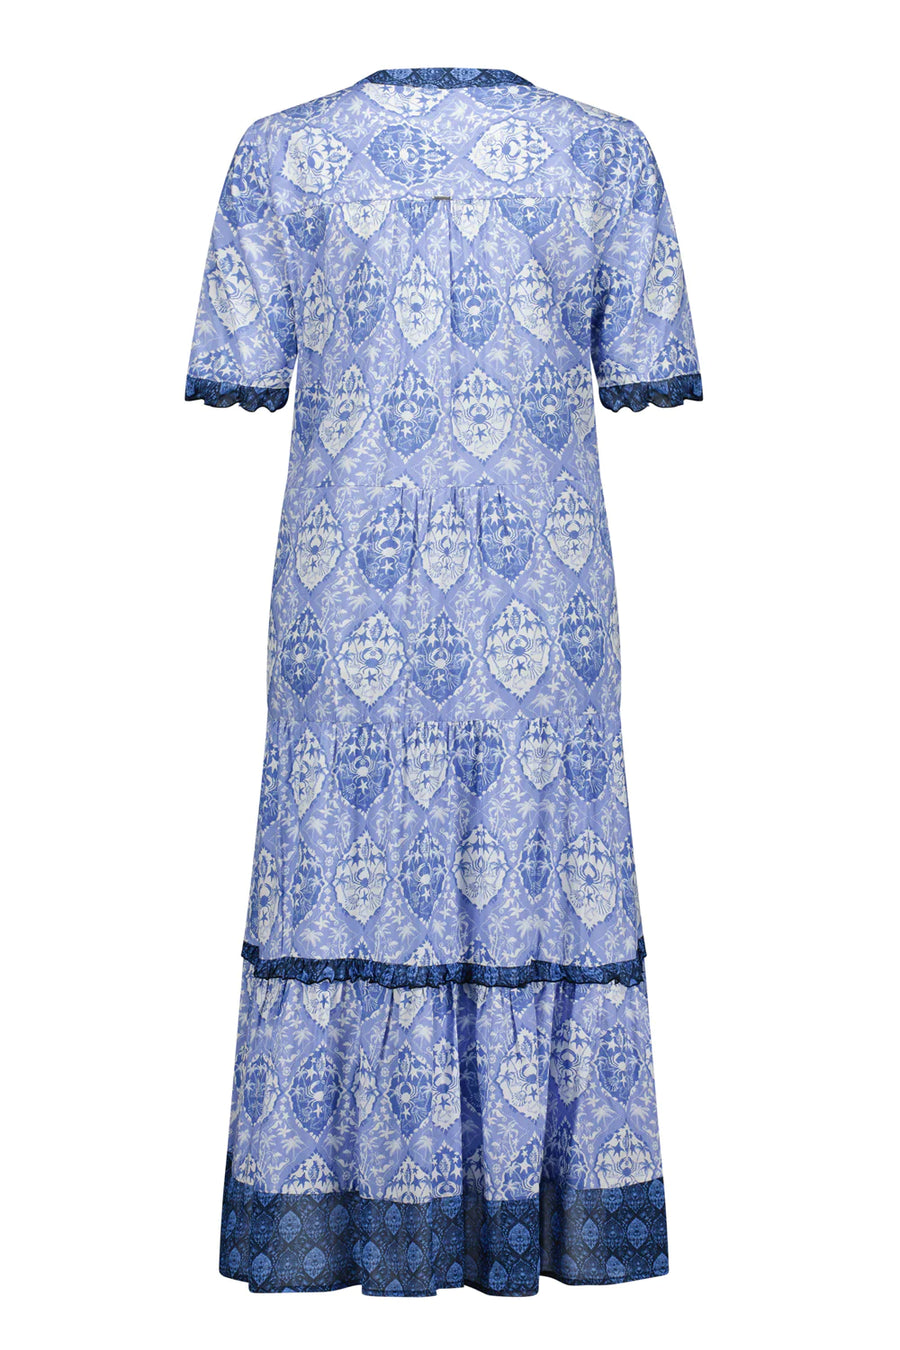 Verge Calypso Dress Print